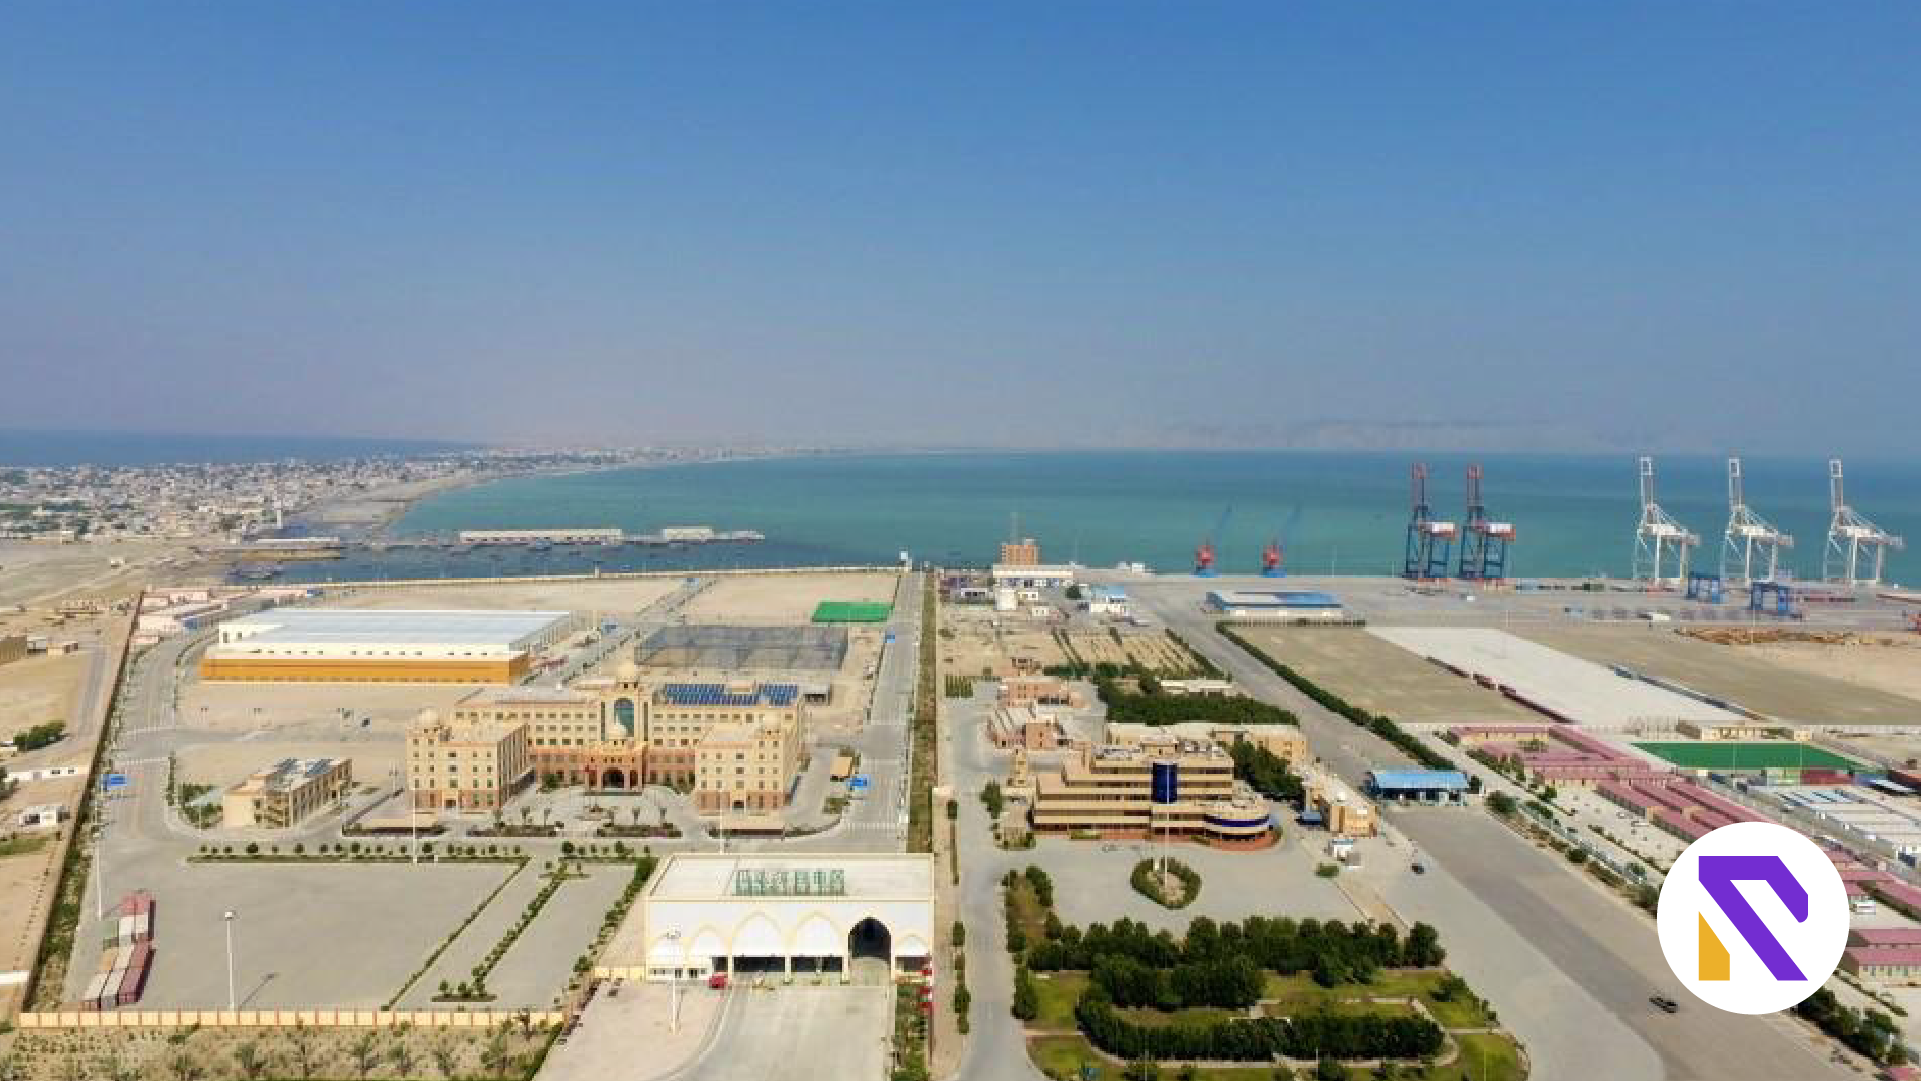 Turkey and Saudi Arabia plan to set up warehouses in Gwadar Free Zone